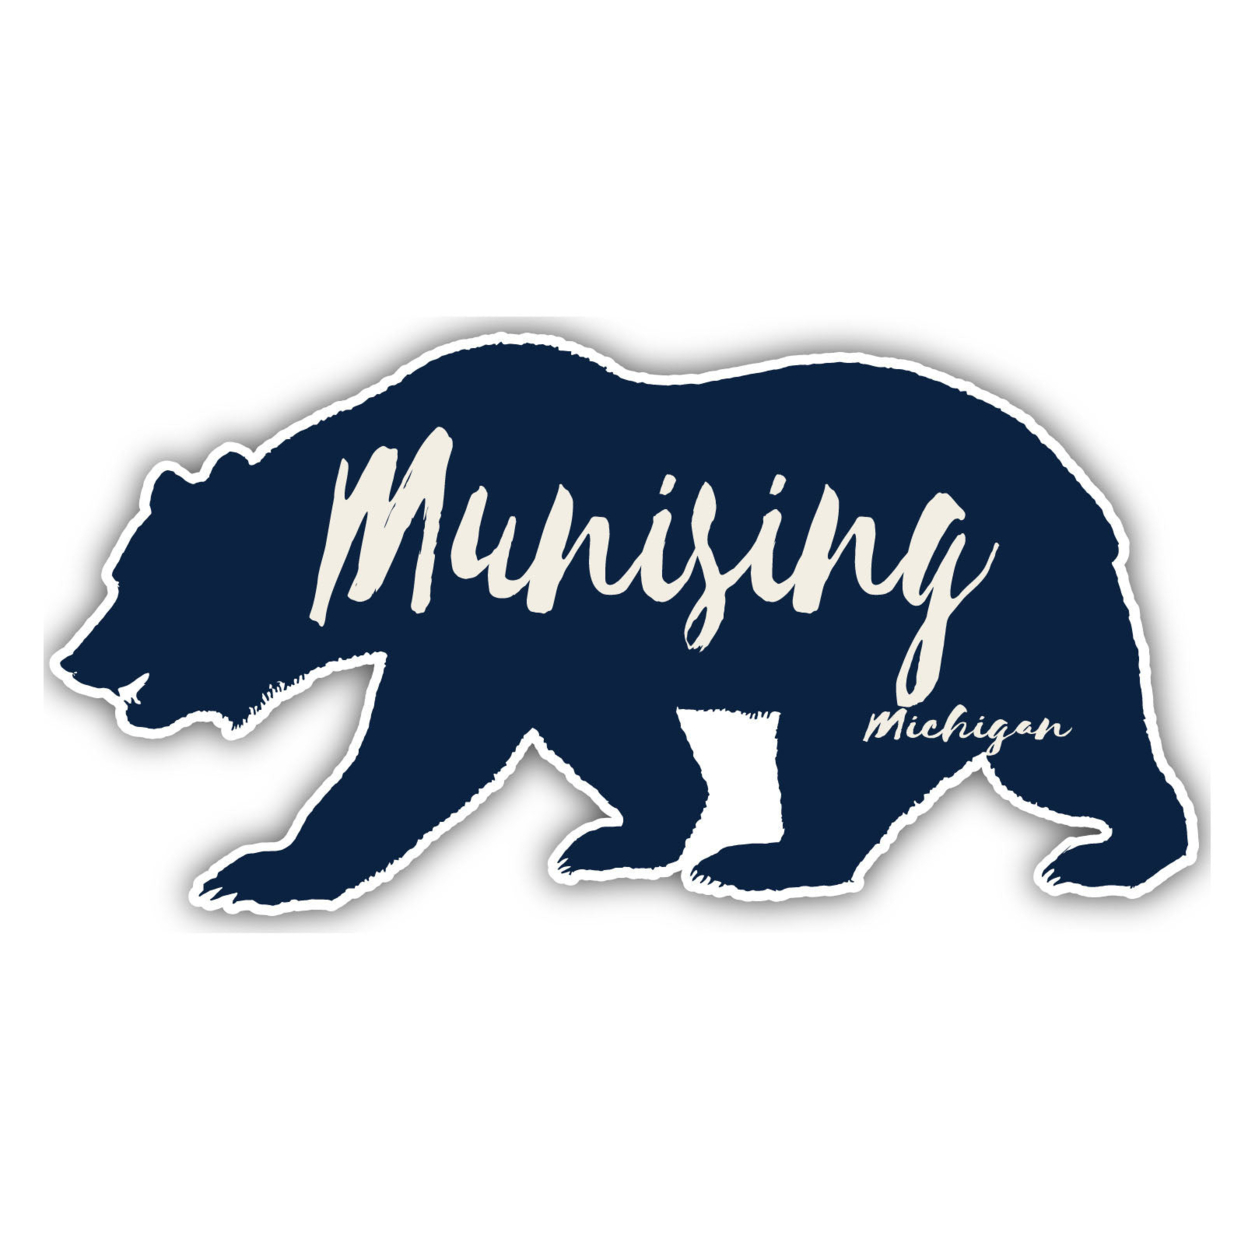 Munising Michigan Souvenir Decorative Stickers (Choose Theme And Size) - Single Unit, 2-Inch, Bear